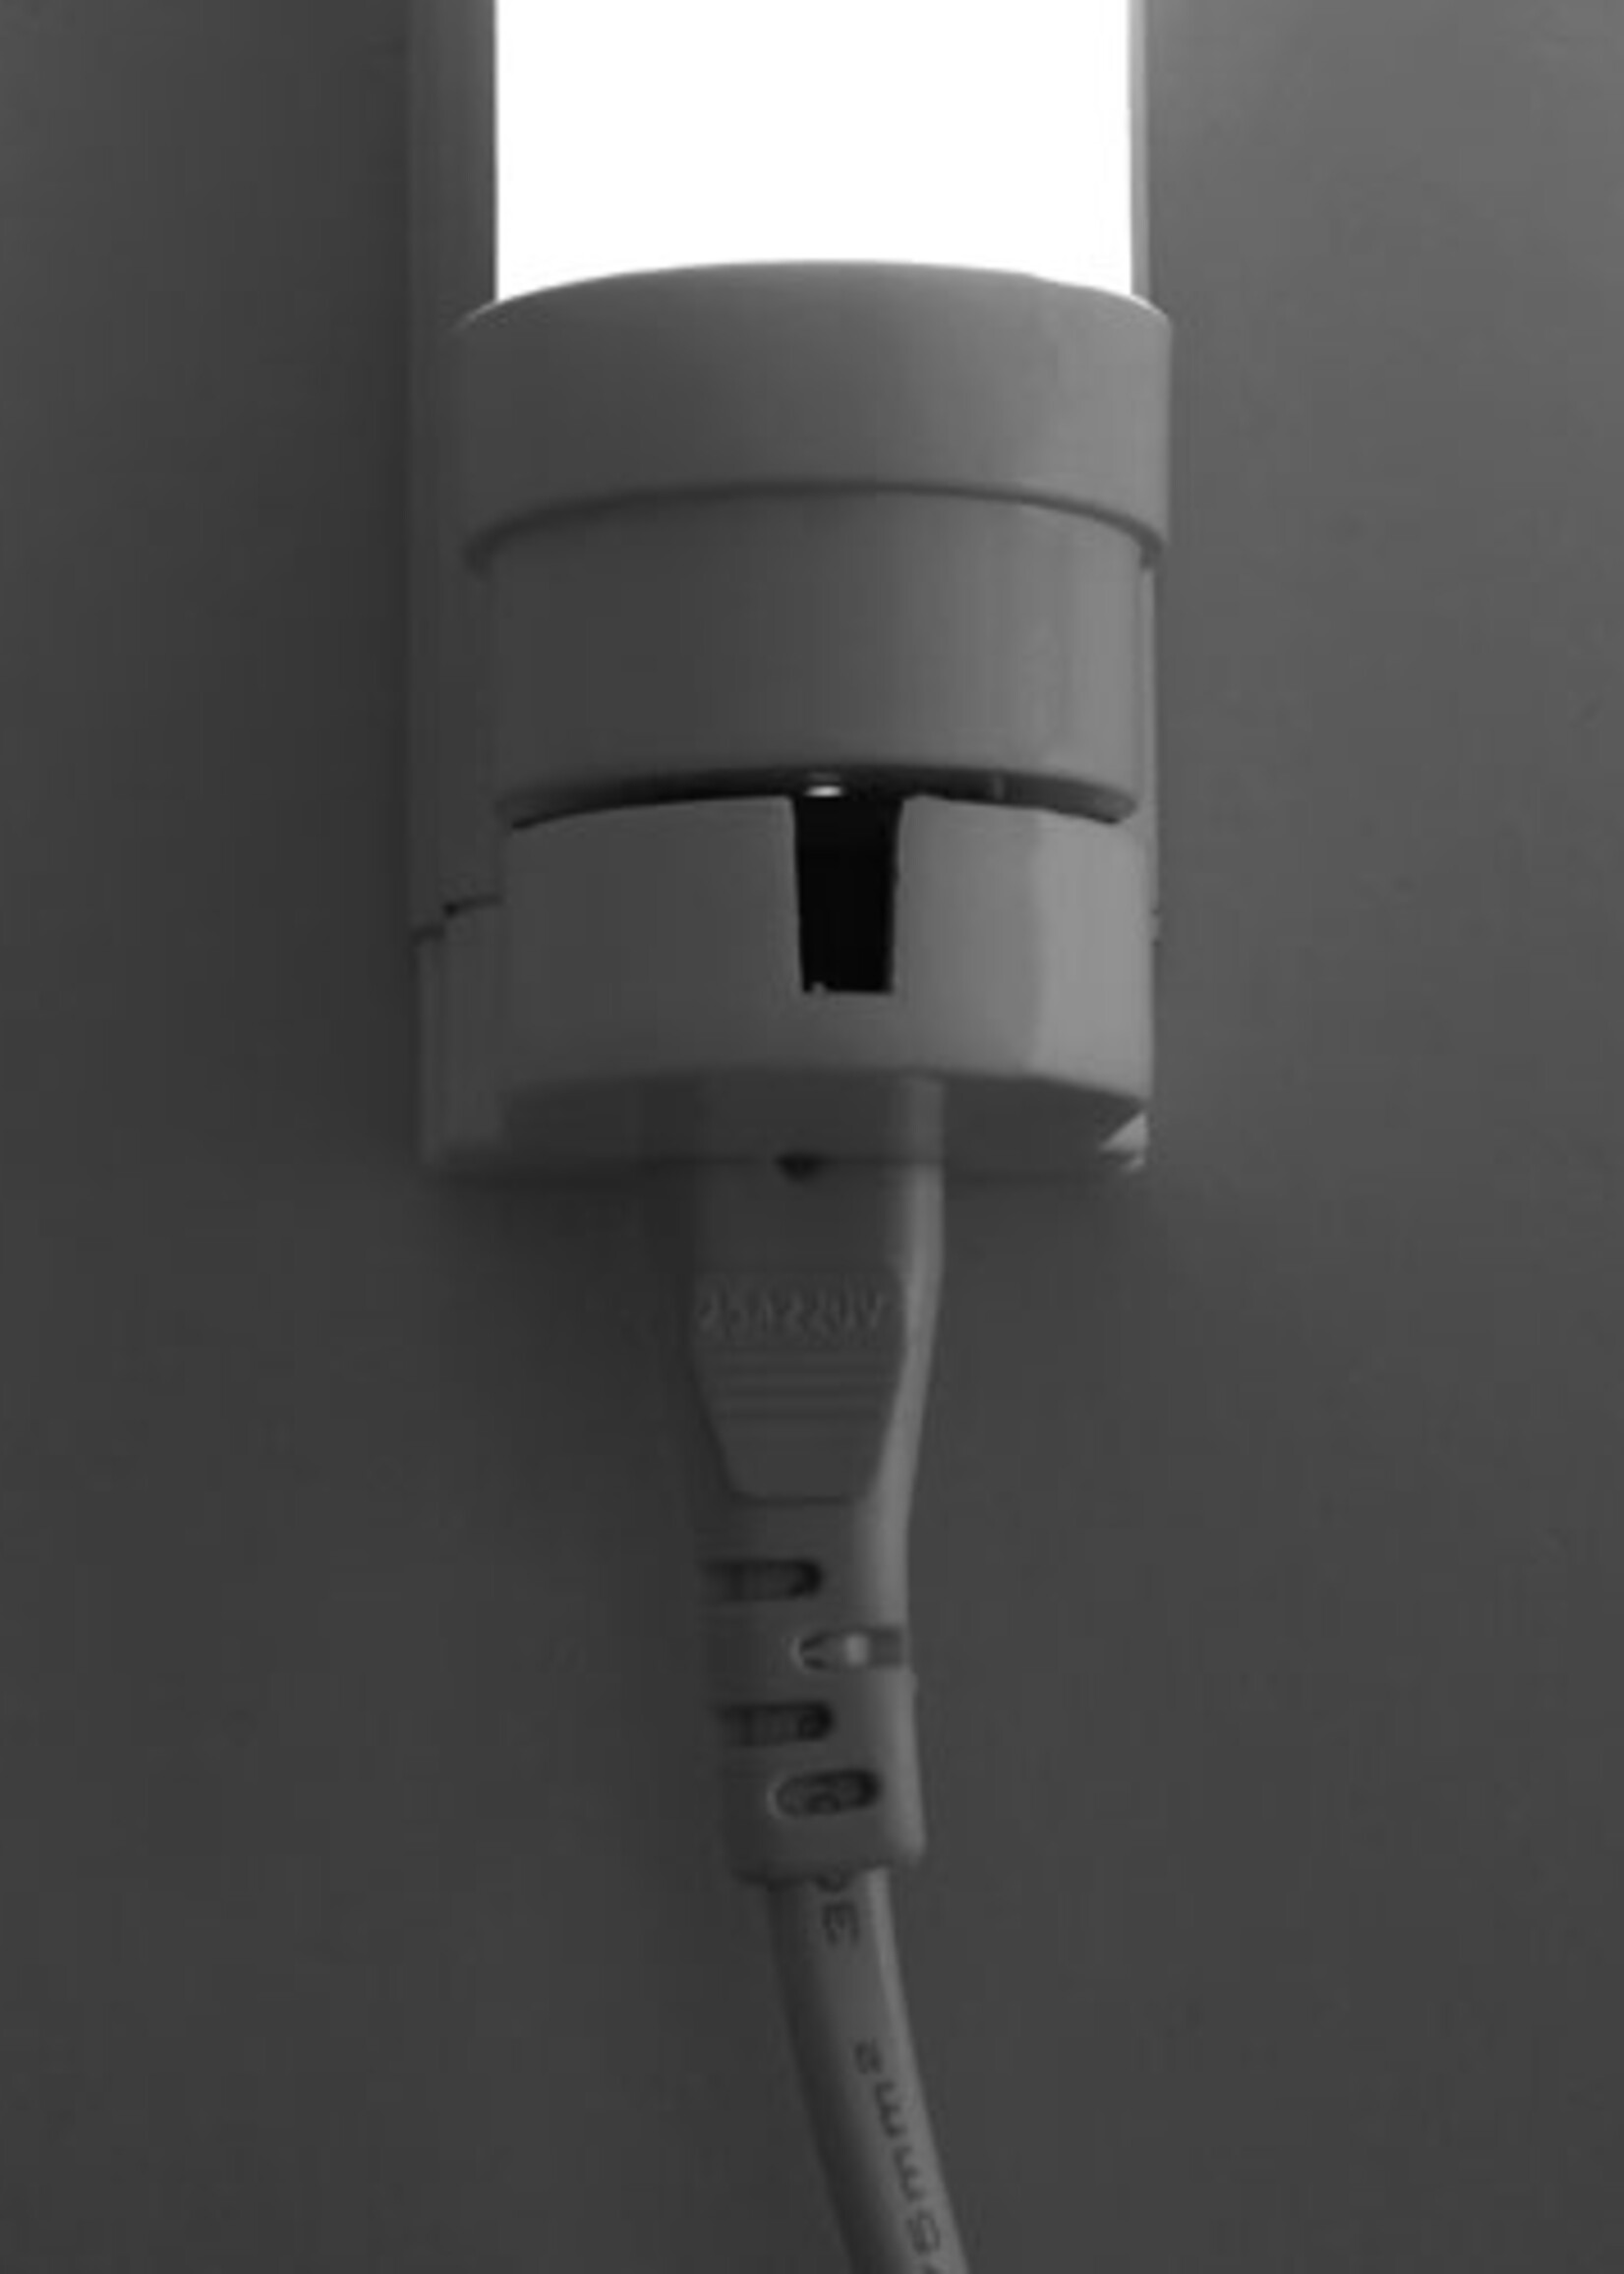 LEDWINKEL-Online LED TL Buis T8 90cm 14W 120lm/W - High lumen